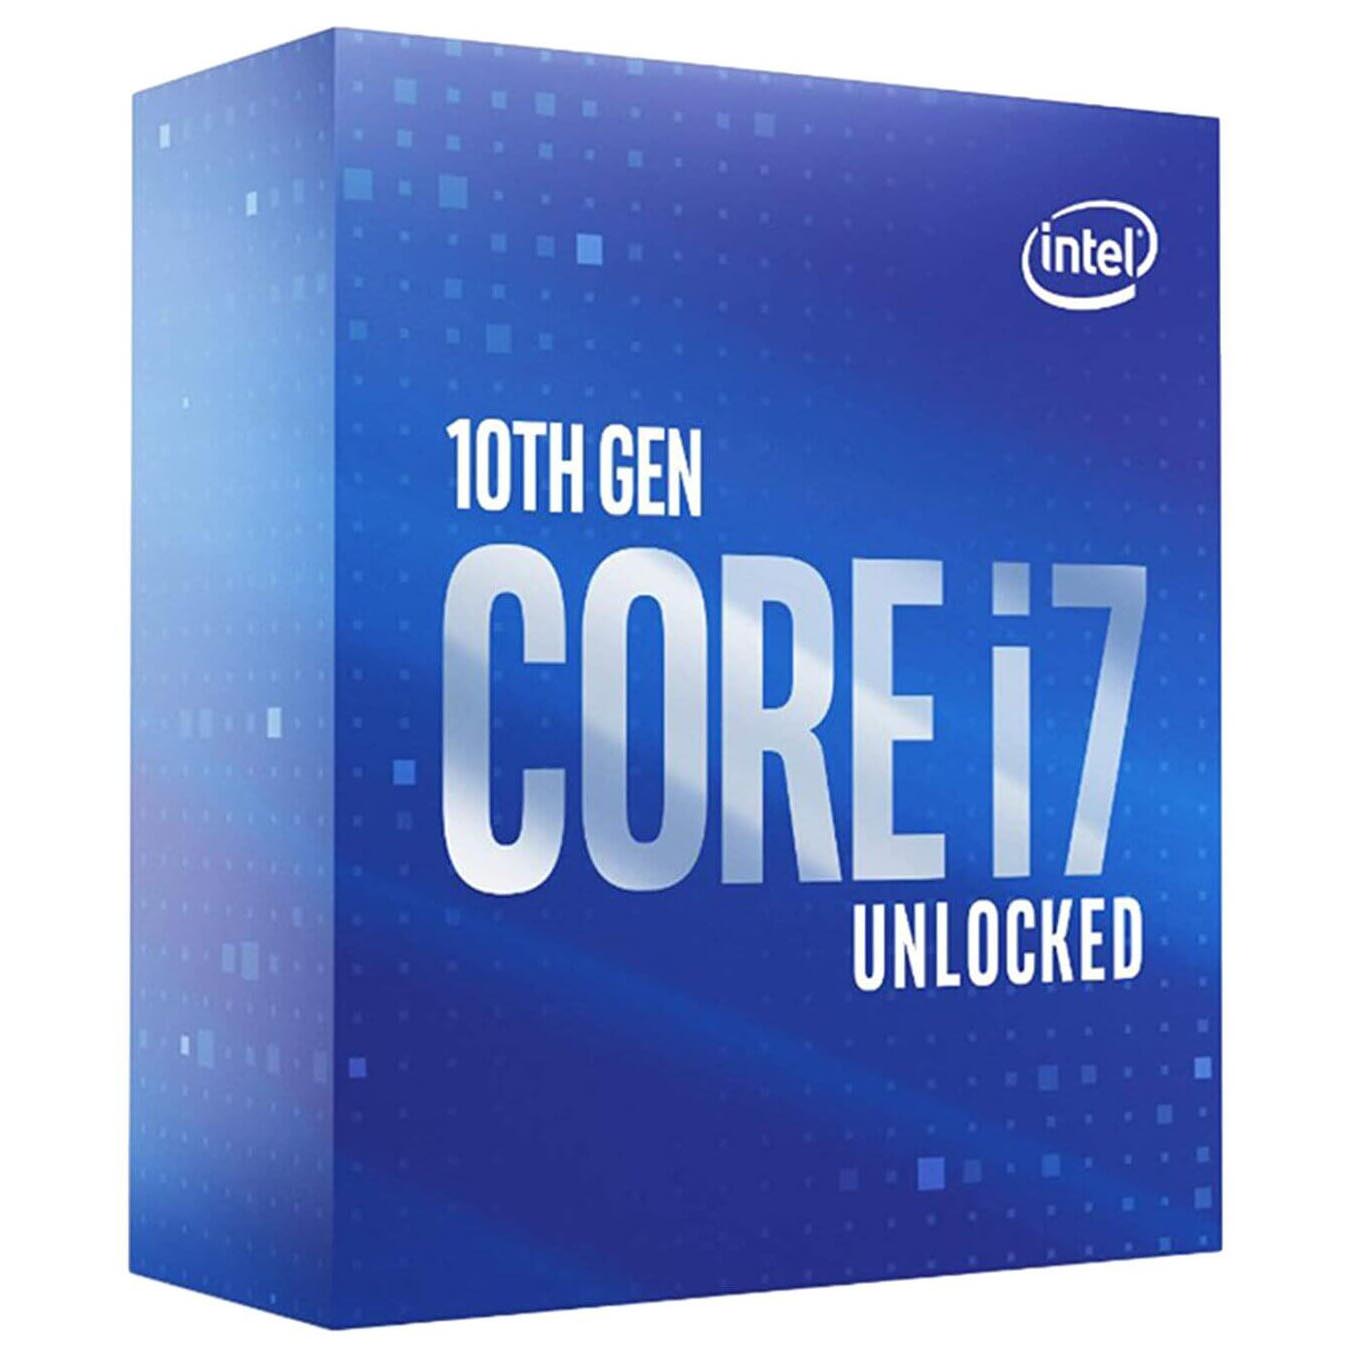 Процессор Intel Core i7-10700K BOX (без кулера), LGA 1200 процессор intel core i7 10700k marvel s avengers collector s edition box без кулера